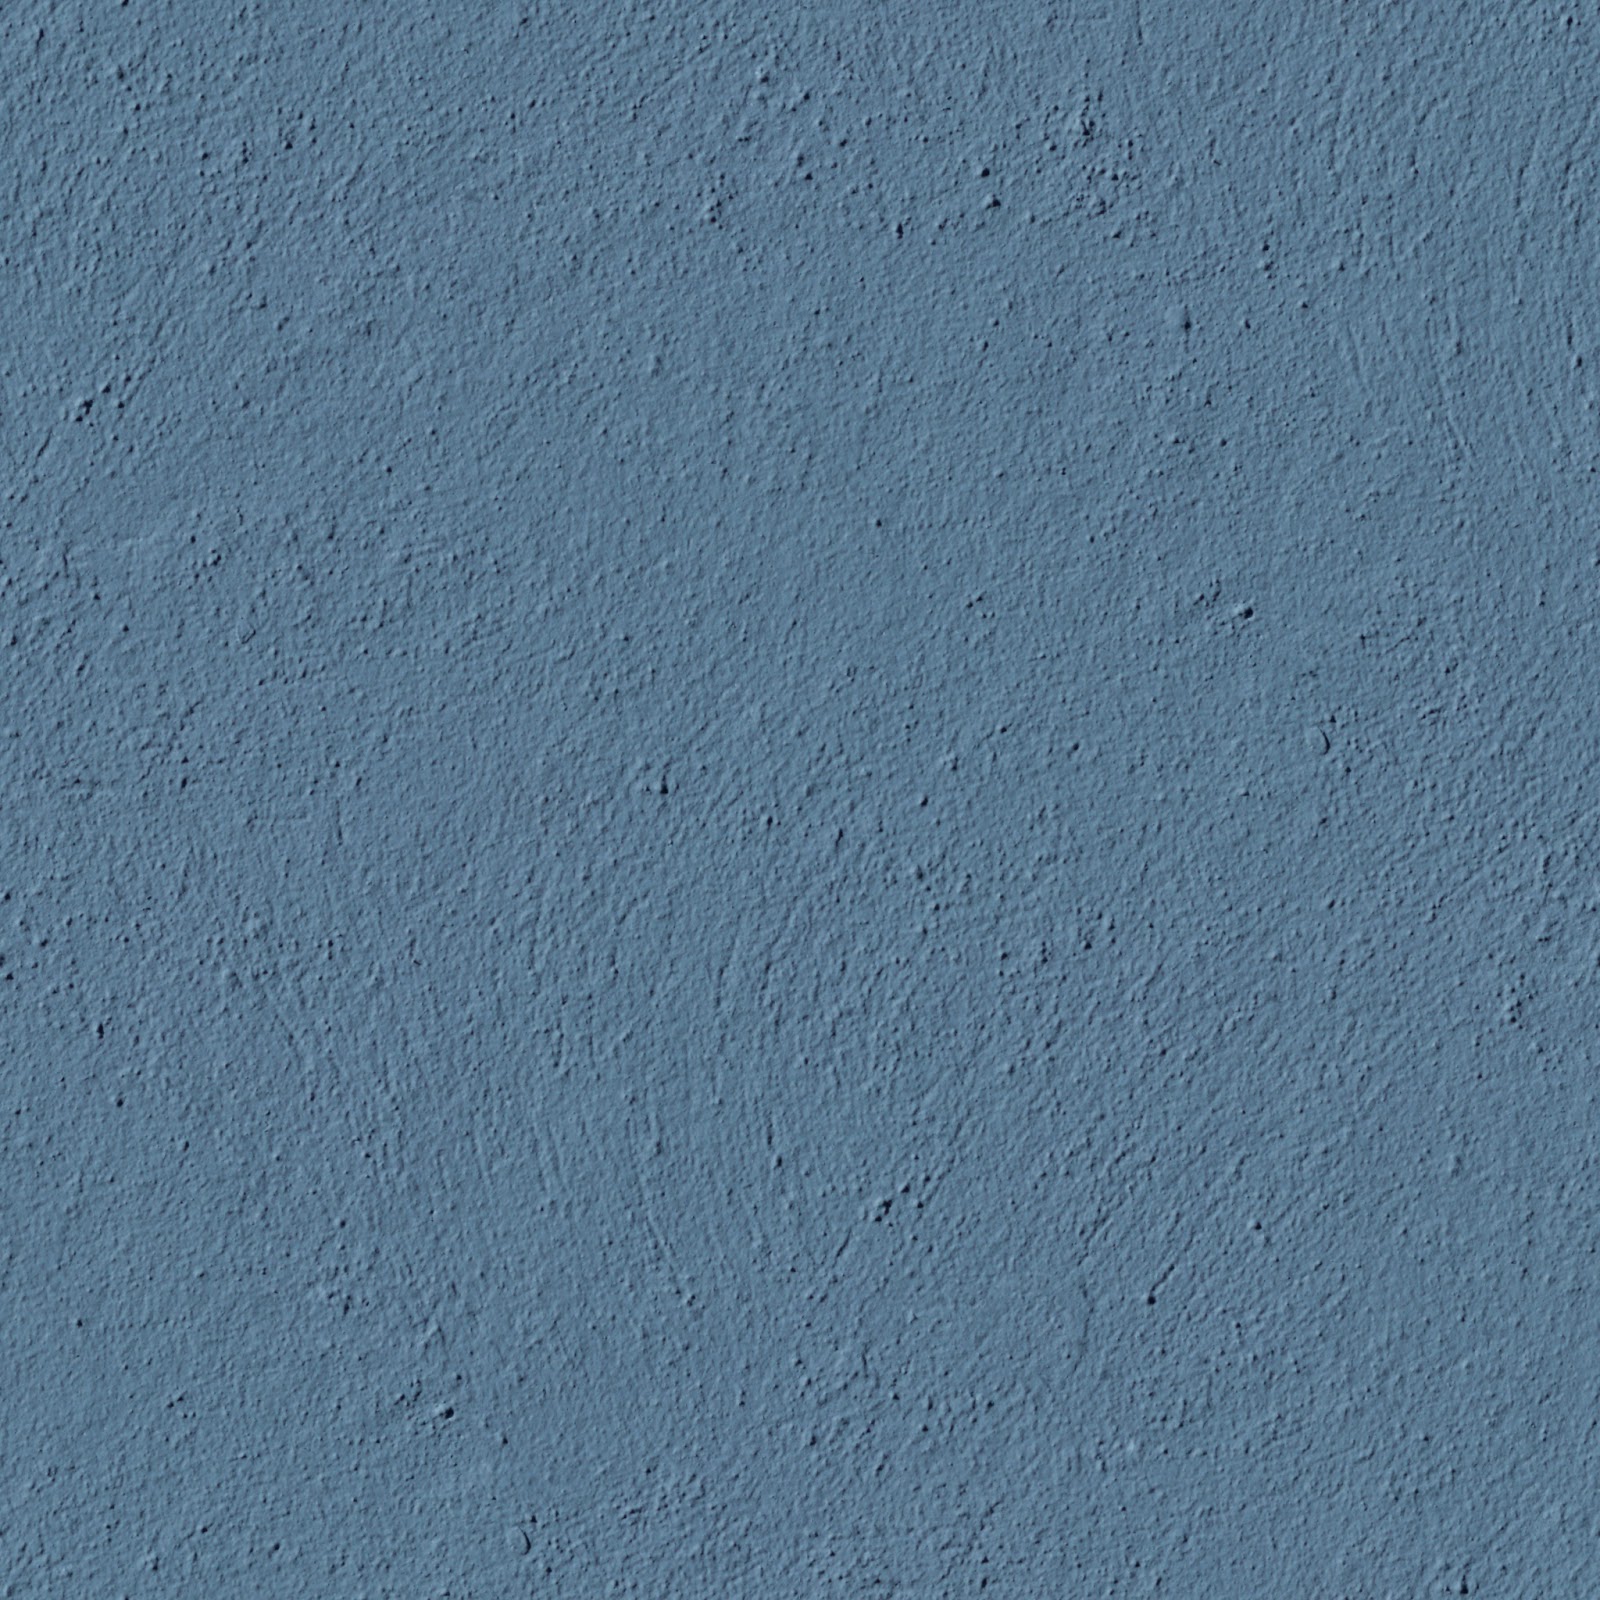 High Resolution Seamless Textures: Blue Wall Texture + Seamless Version